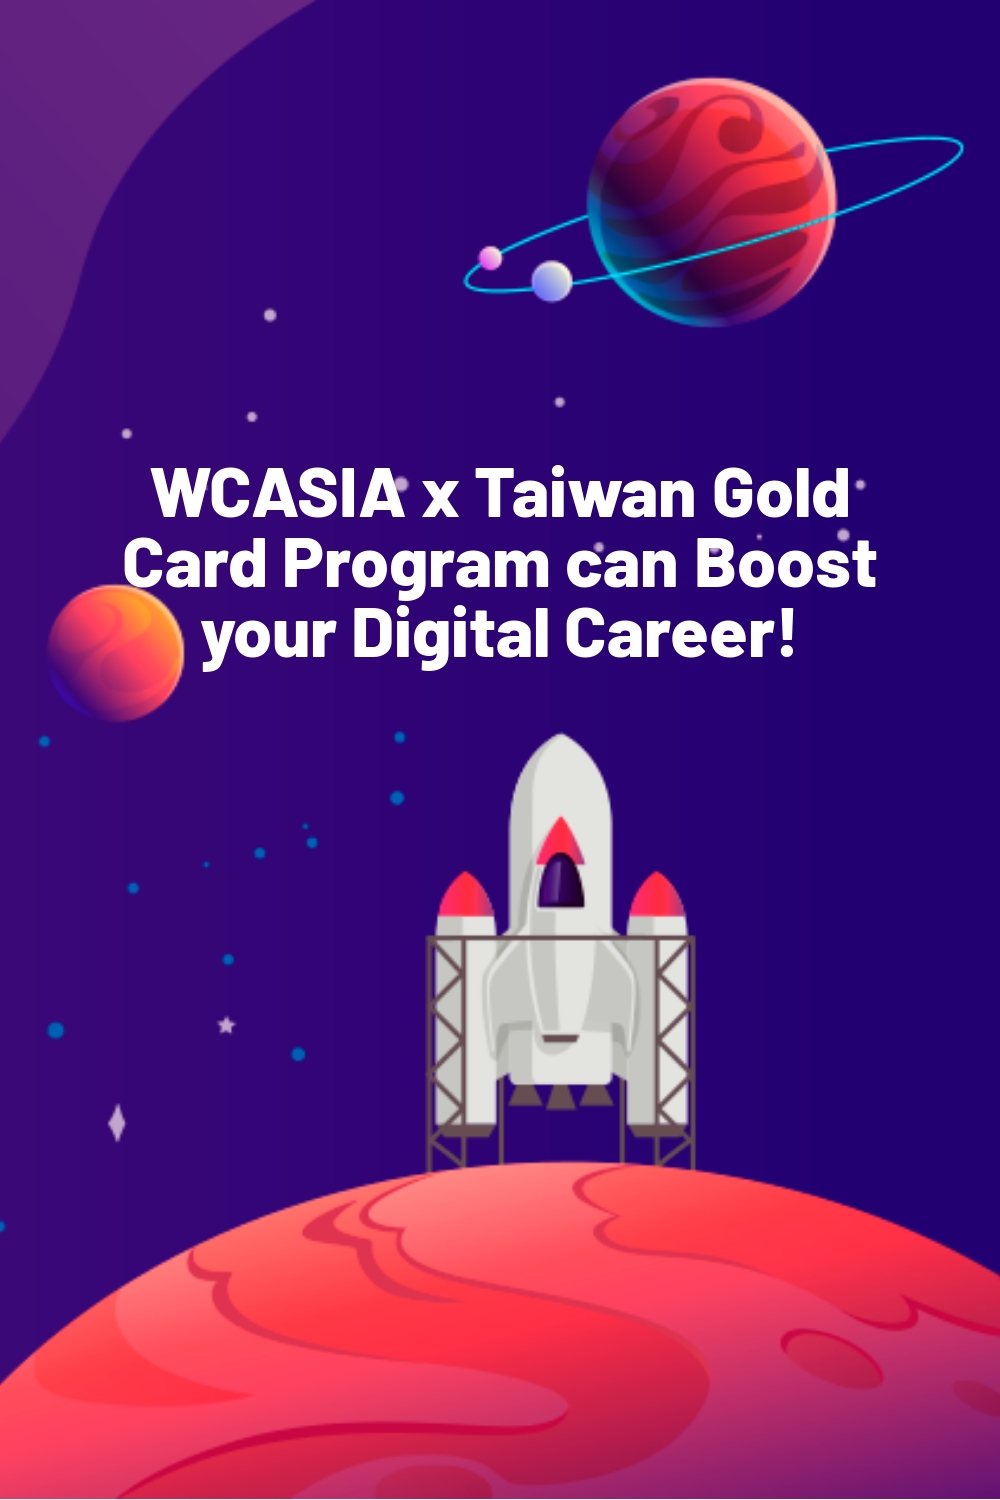 WCASIA x Taiwan Gold Card Program can Boost your Digital Career!